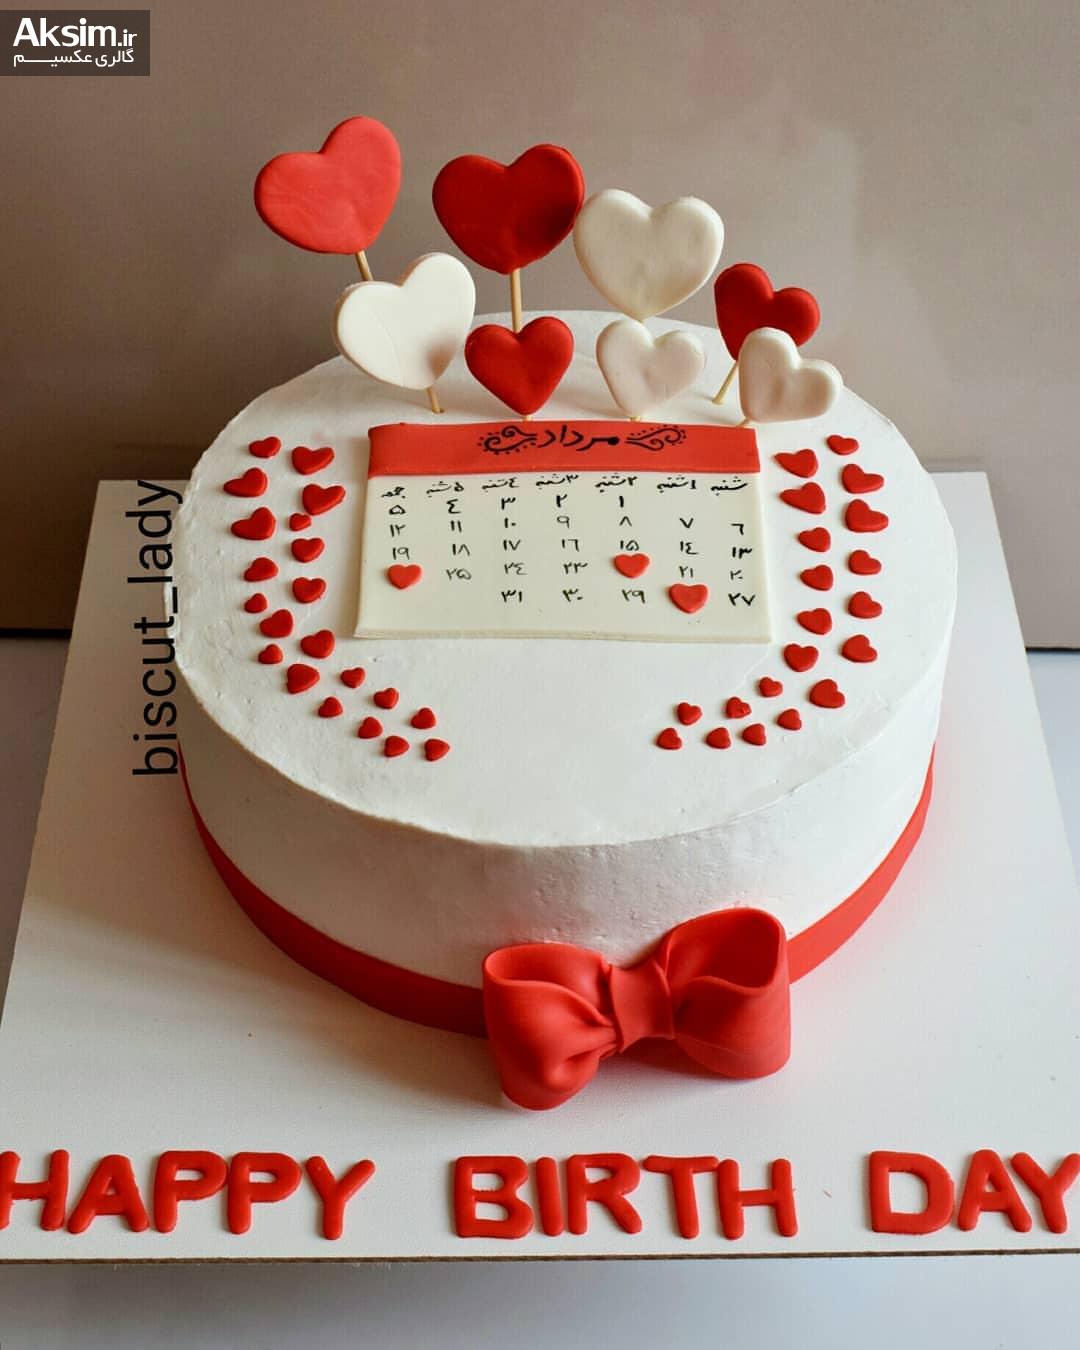 عکس کیک تولد خاص عاشقانه
